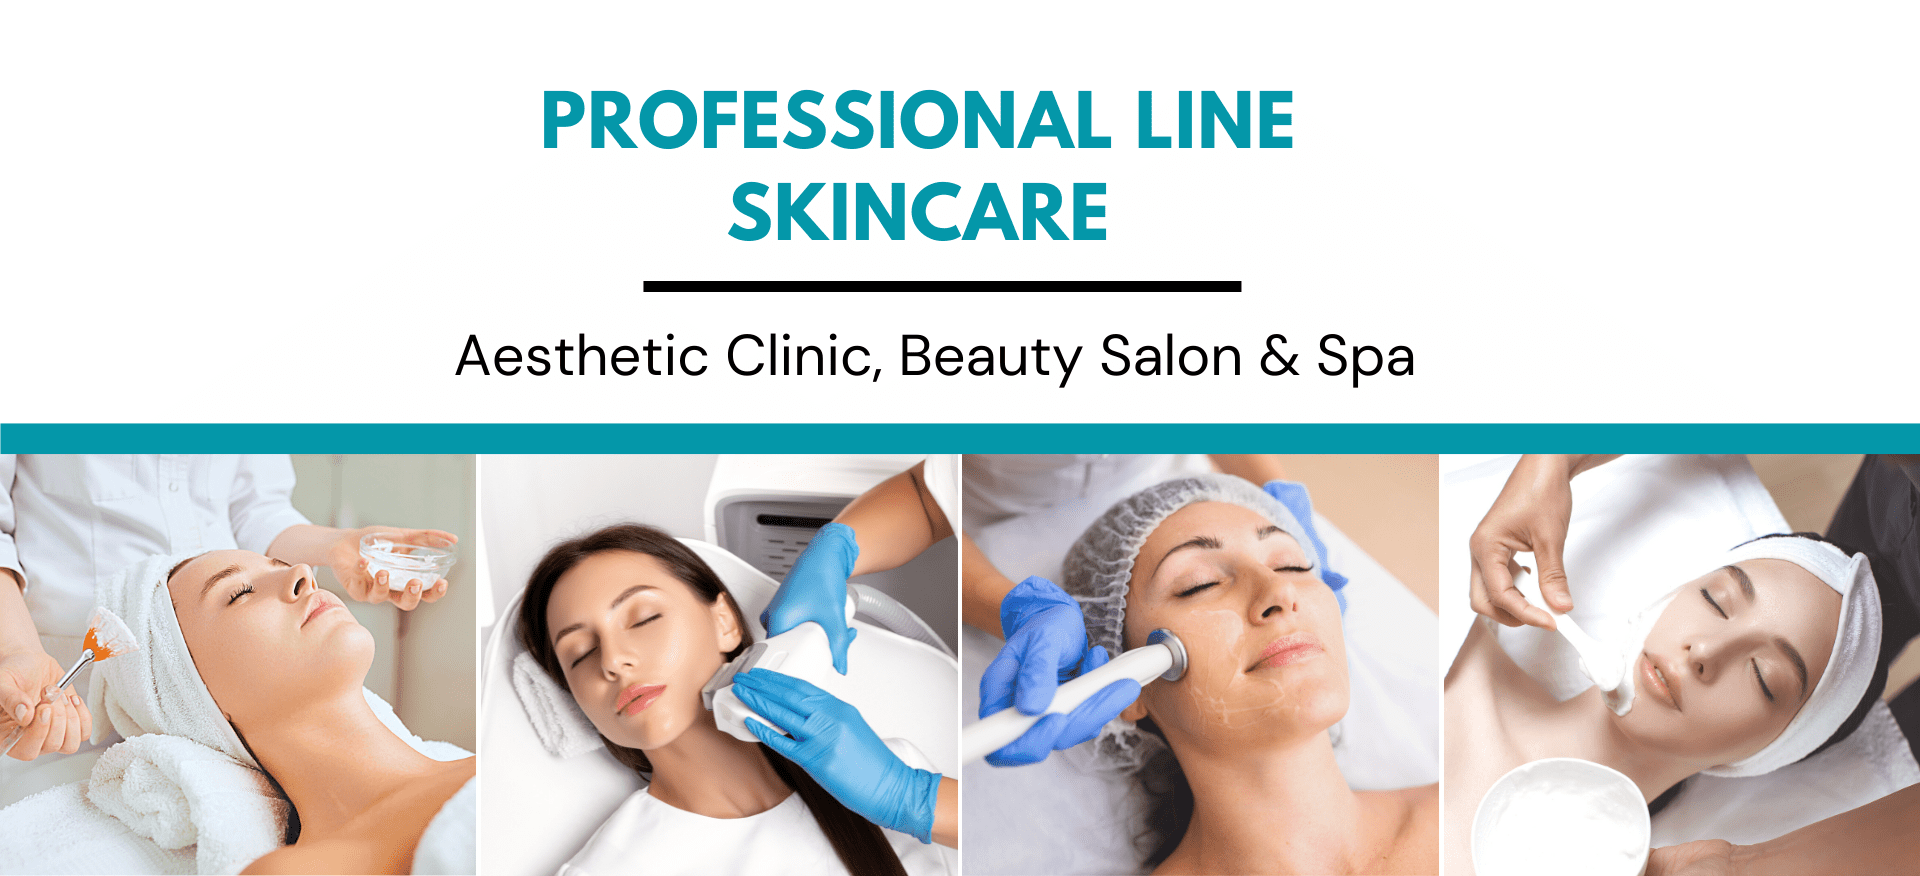 Professional Line Skincare 1960x1200